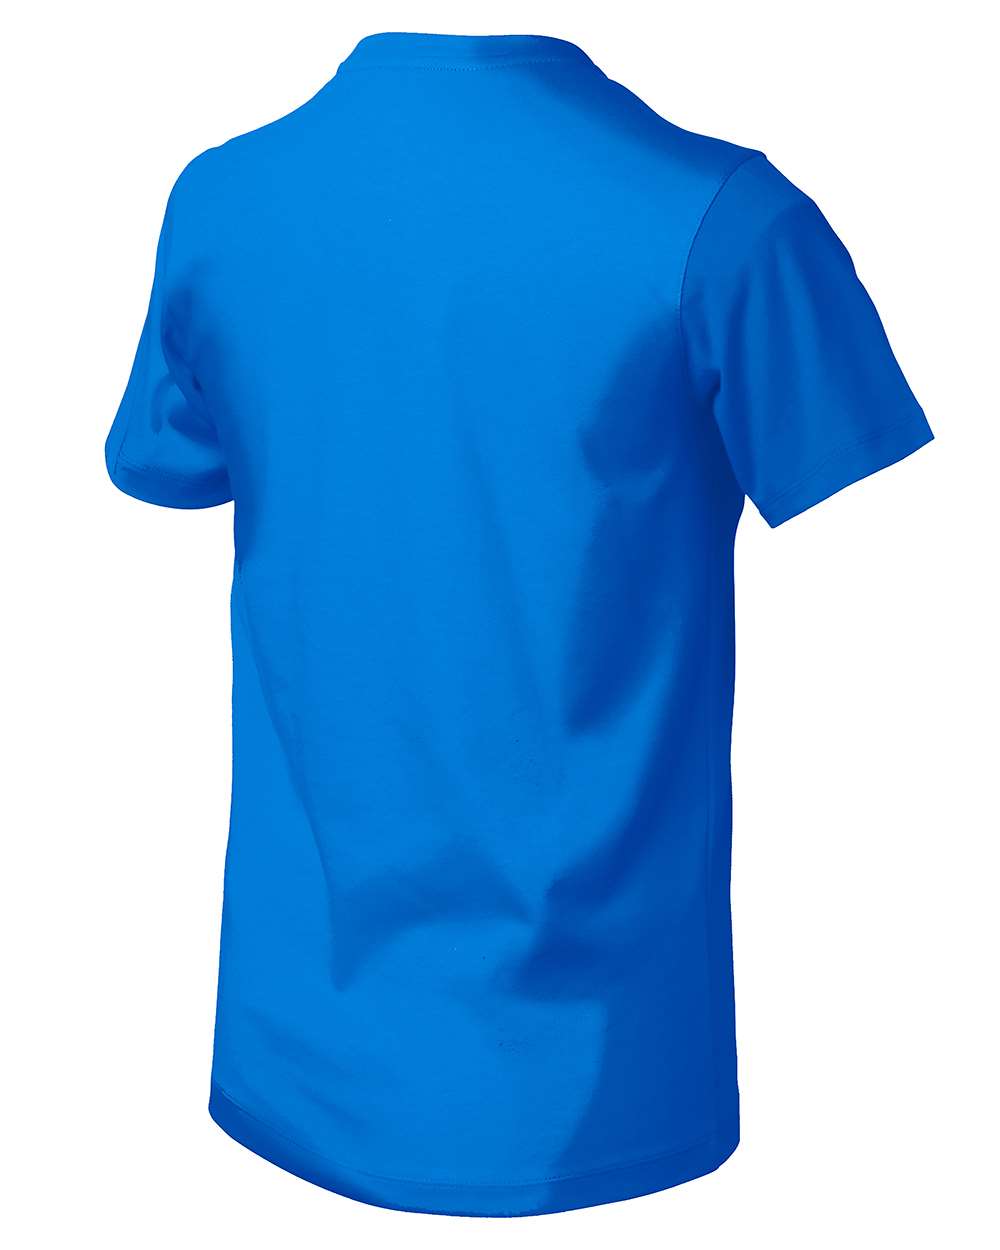 New Balance Youth Performance T-Shirt #YB81004P Light Blue Back